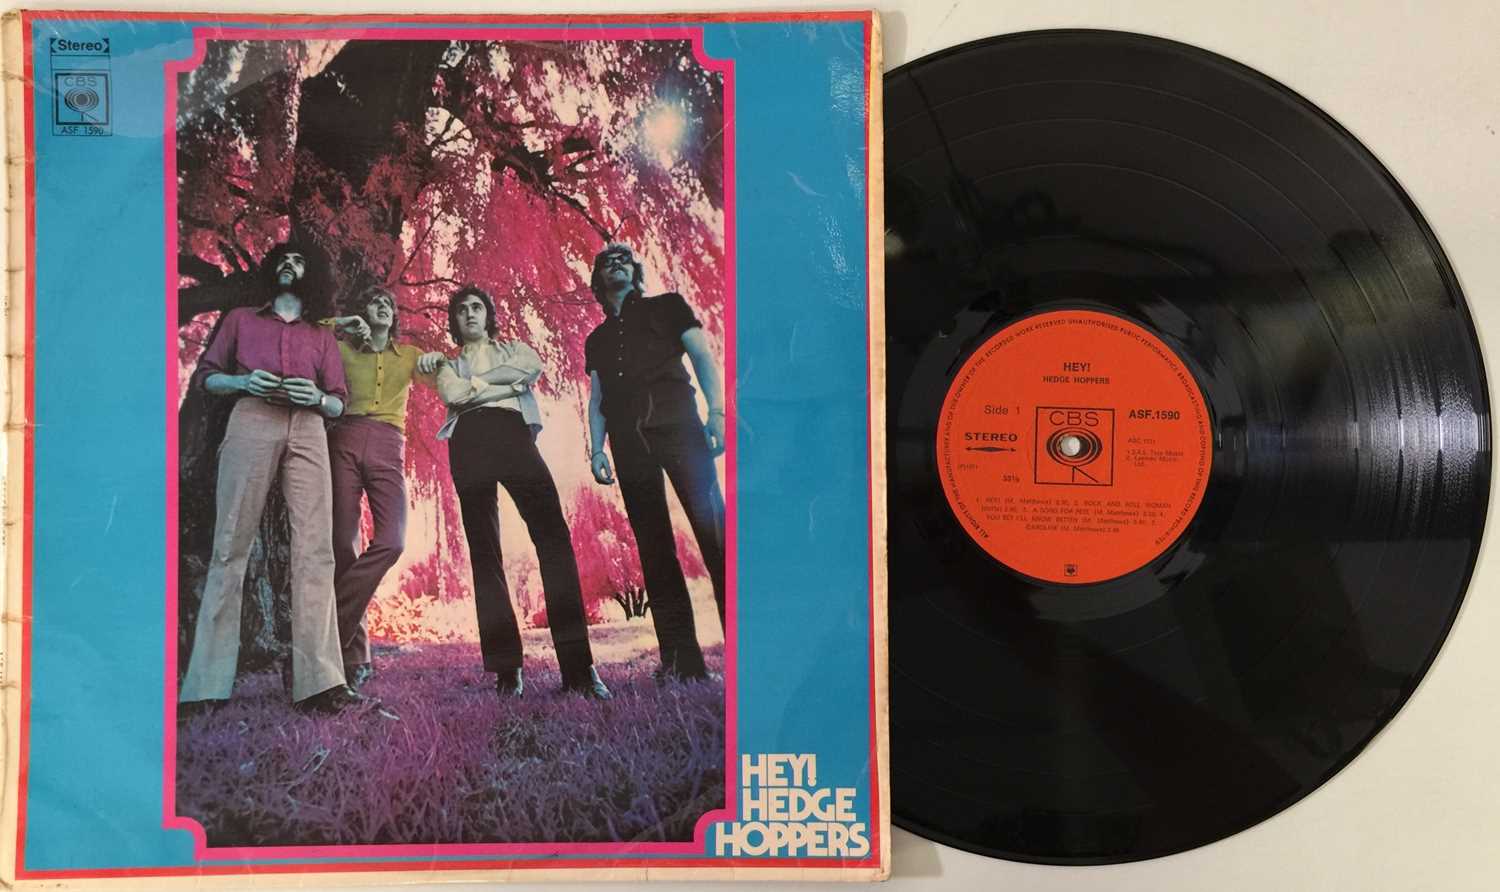 Lot 63 - HEDGE HOPPERS - HEY! LP (UK BEAT - SOUTH